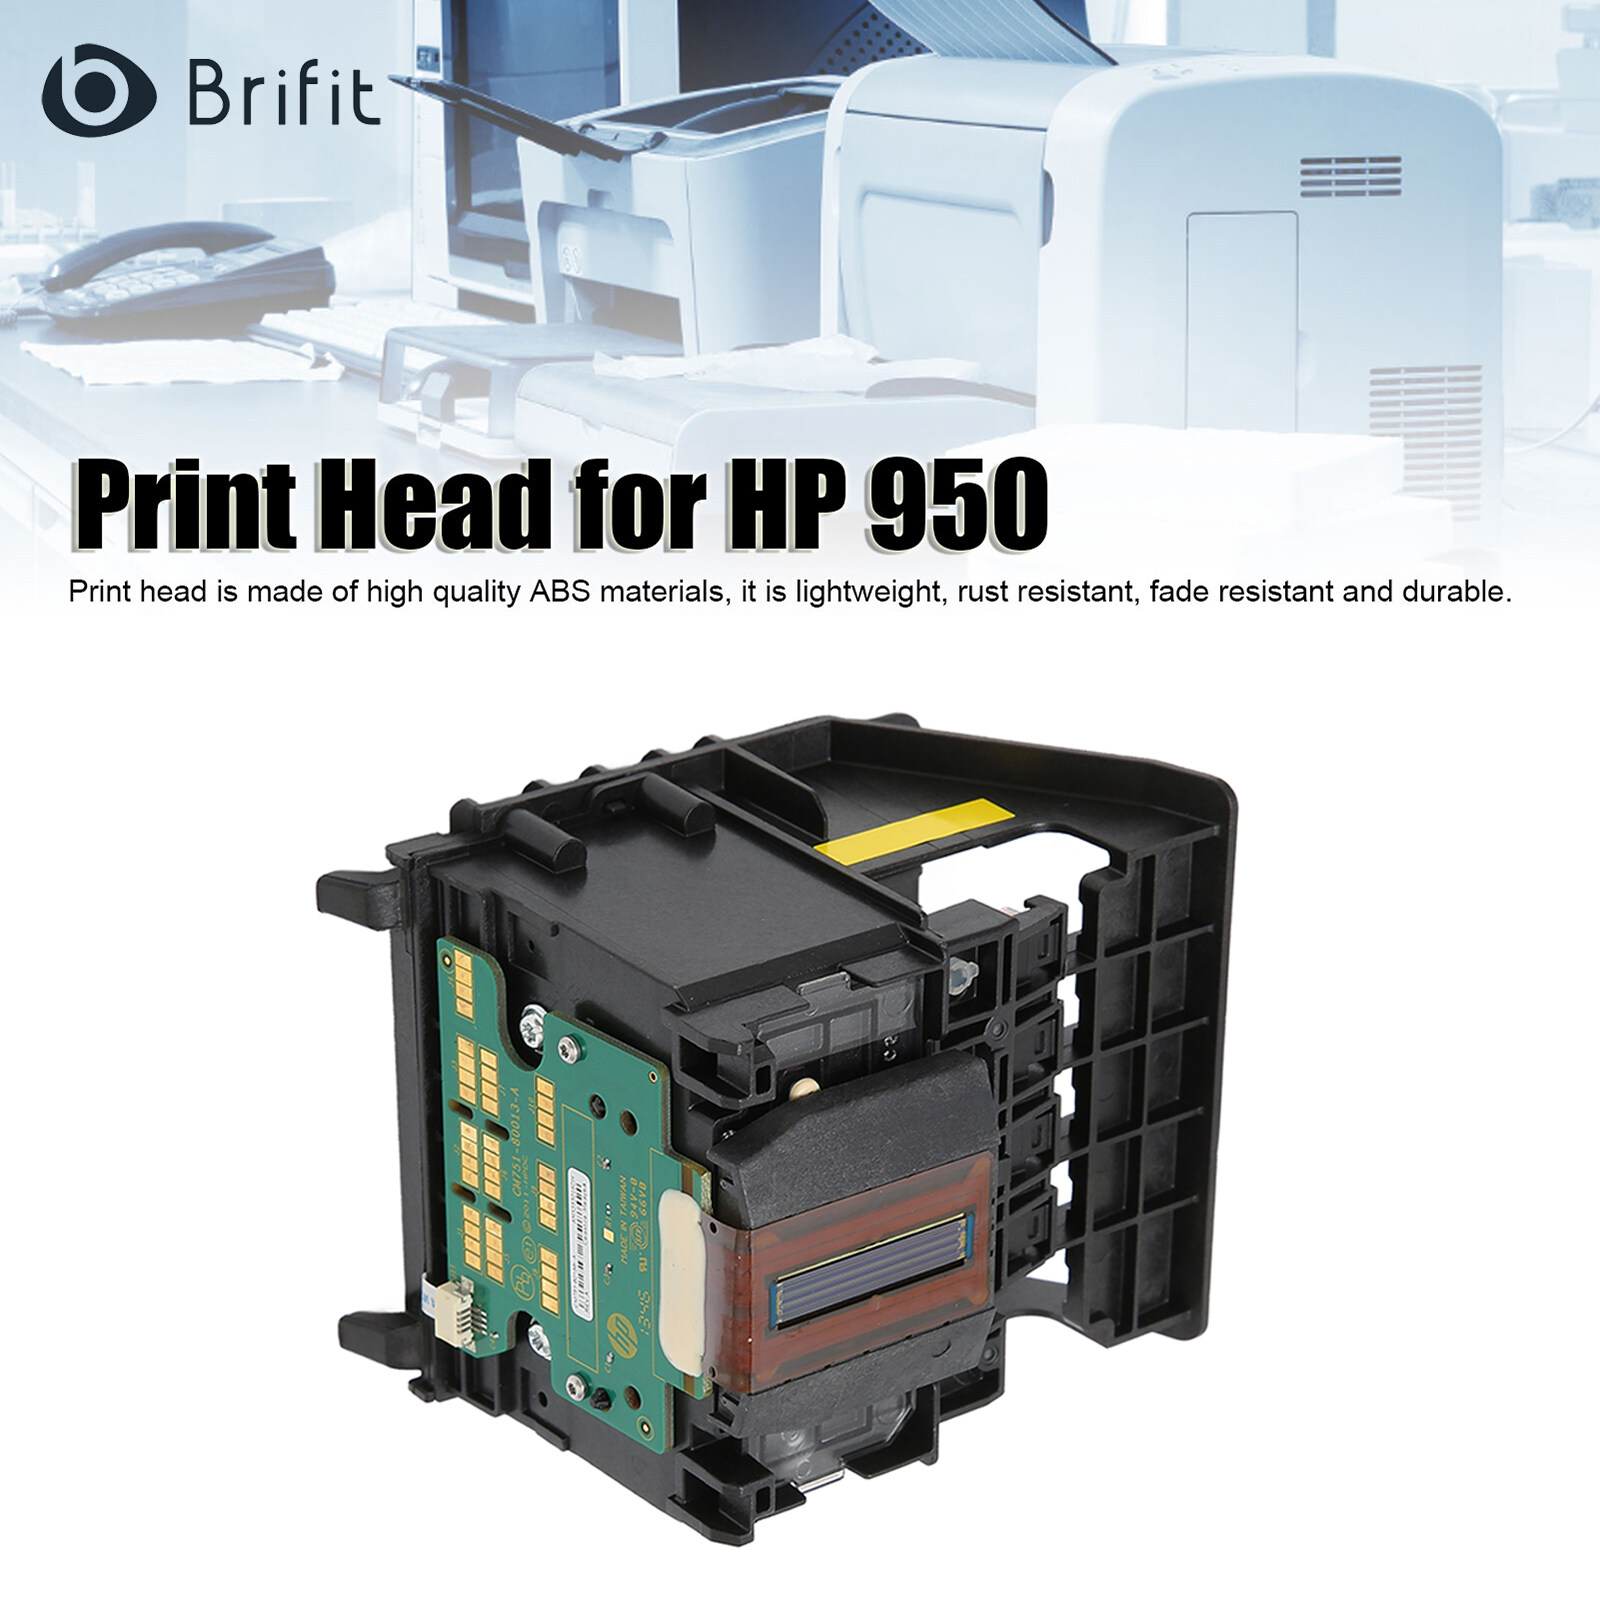 Brifit Đầu in HP Color Printhead cho HP950 8100 8600 8610 8620 8650 251DW